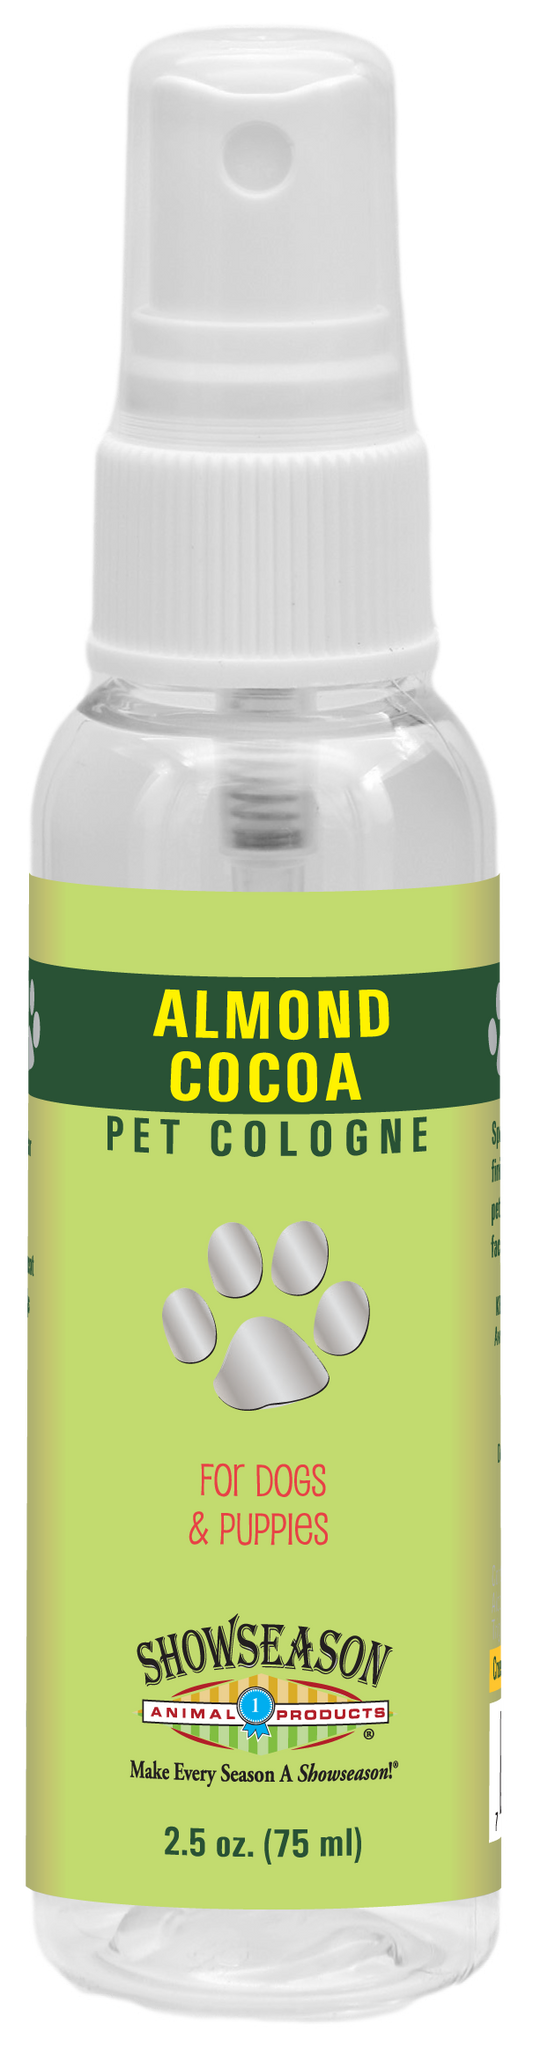 Almond Cocoa Pet Cologne | Showseason®